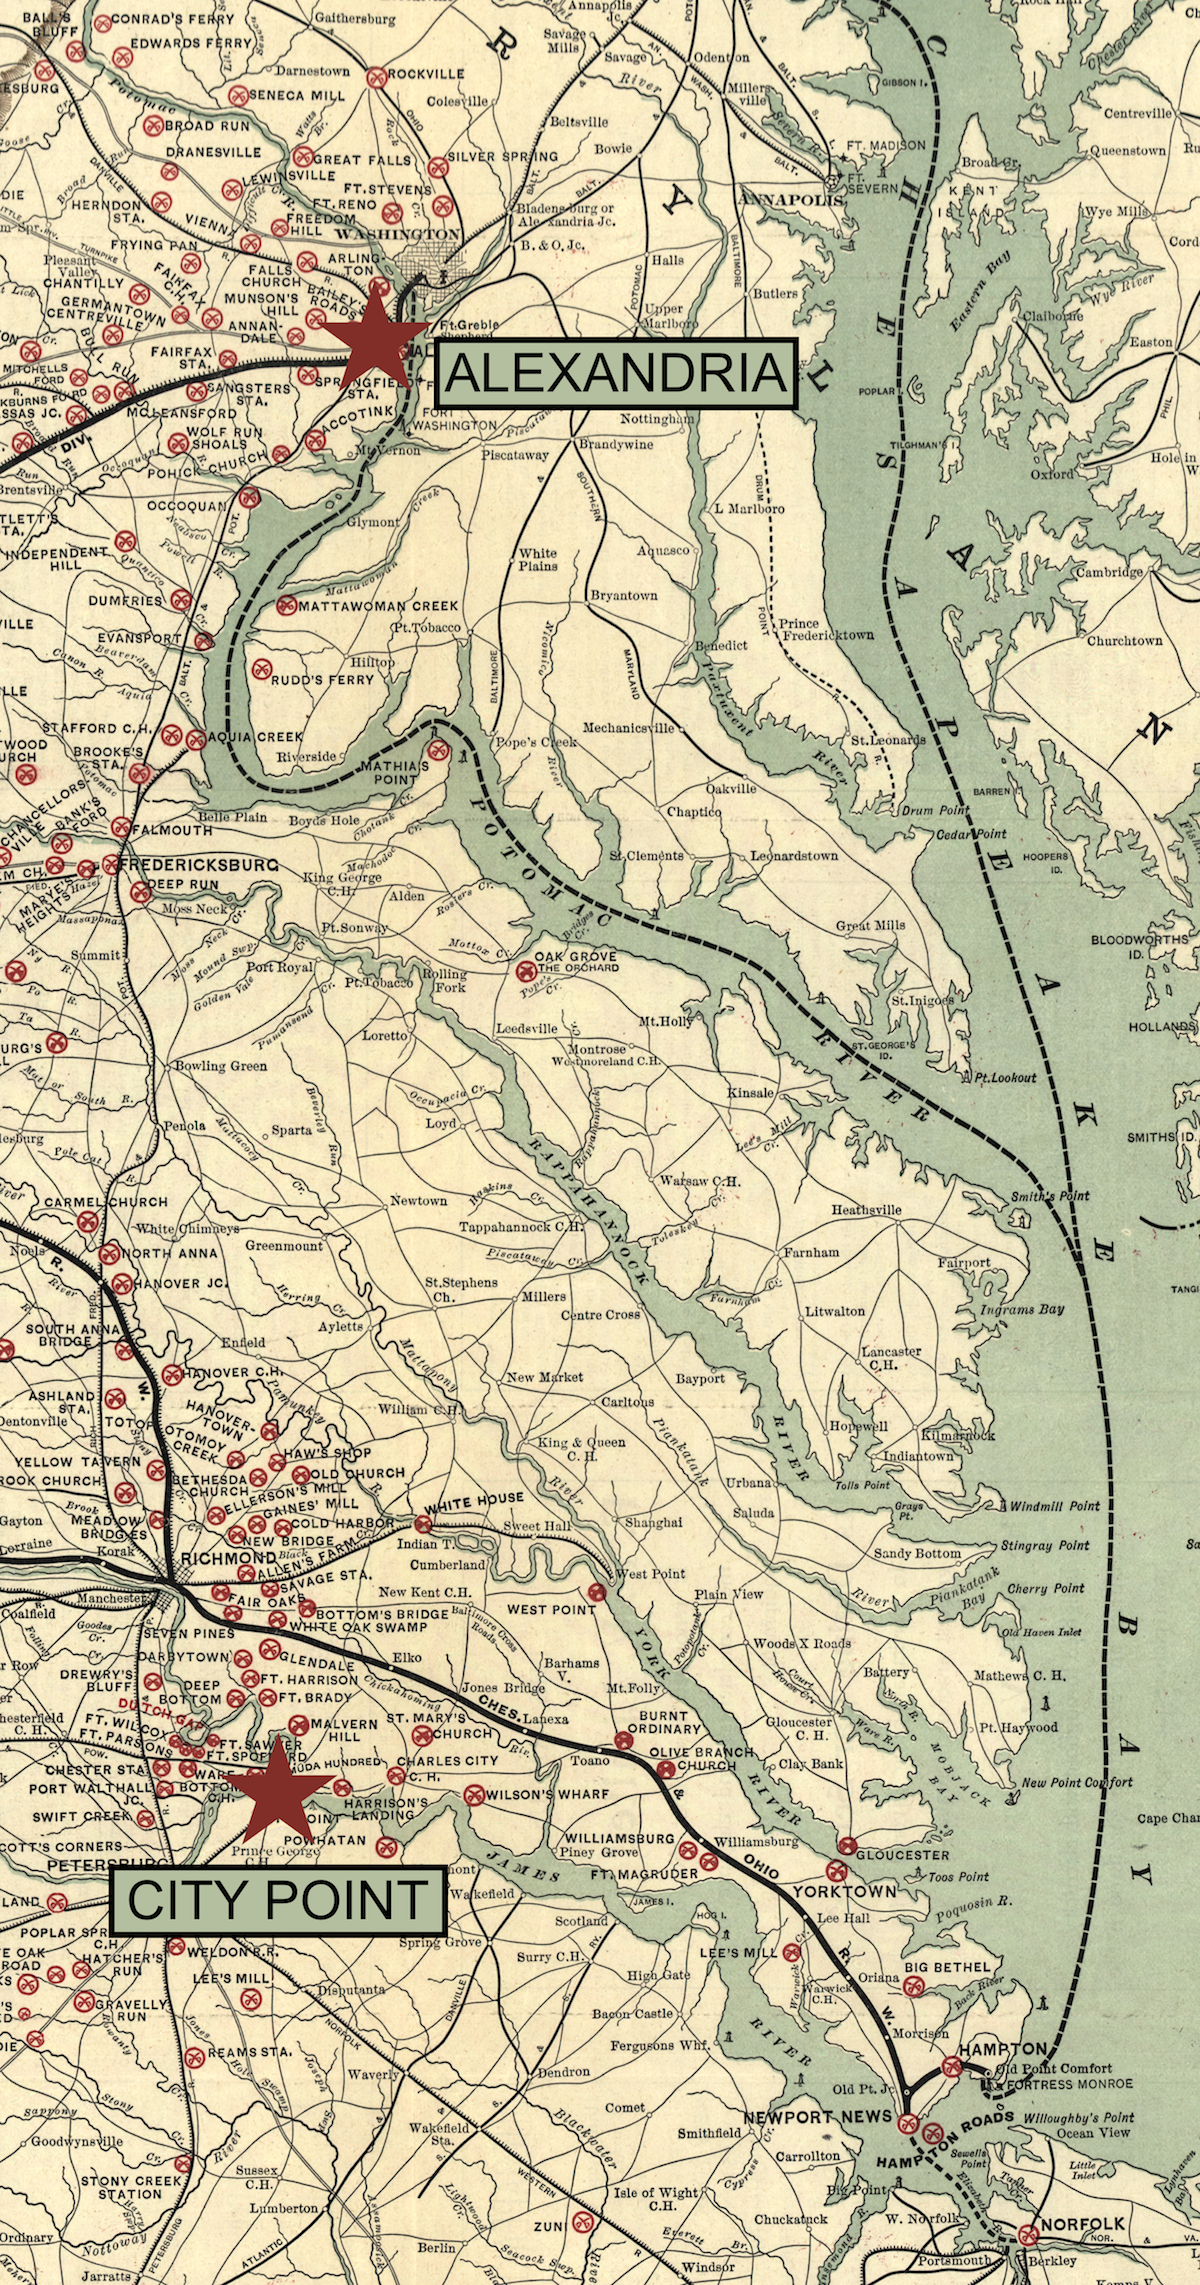 Chesapeake And Ohio Railway Company Map showing Alexandria and City Point Virginia 